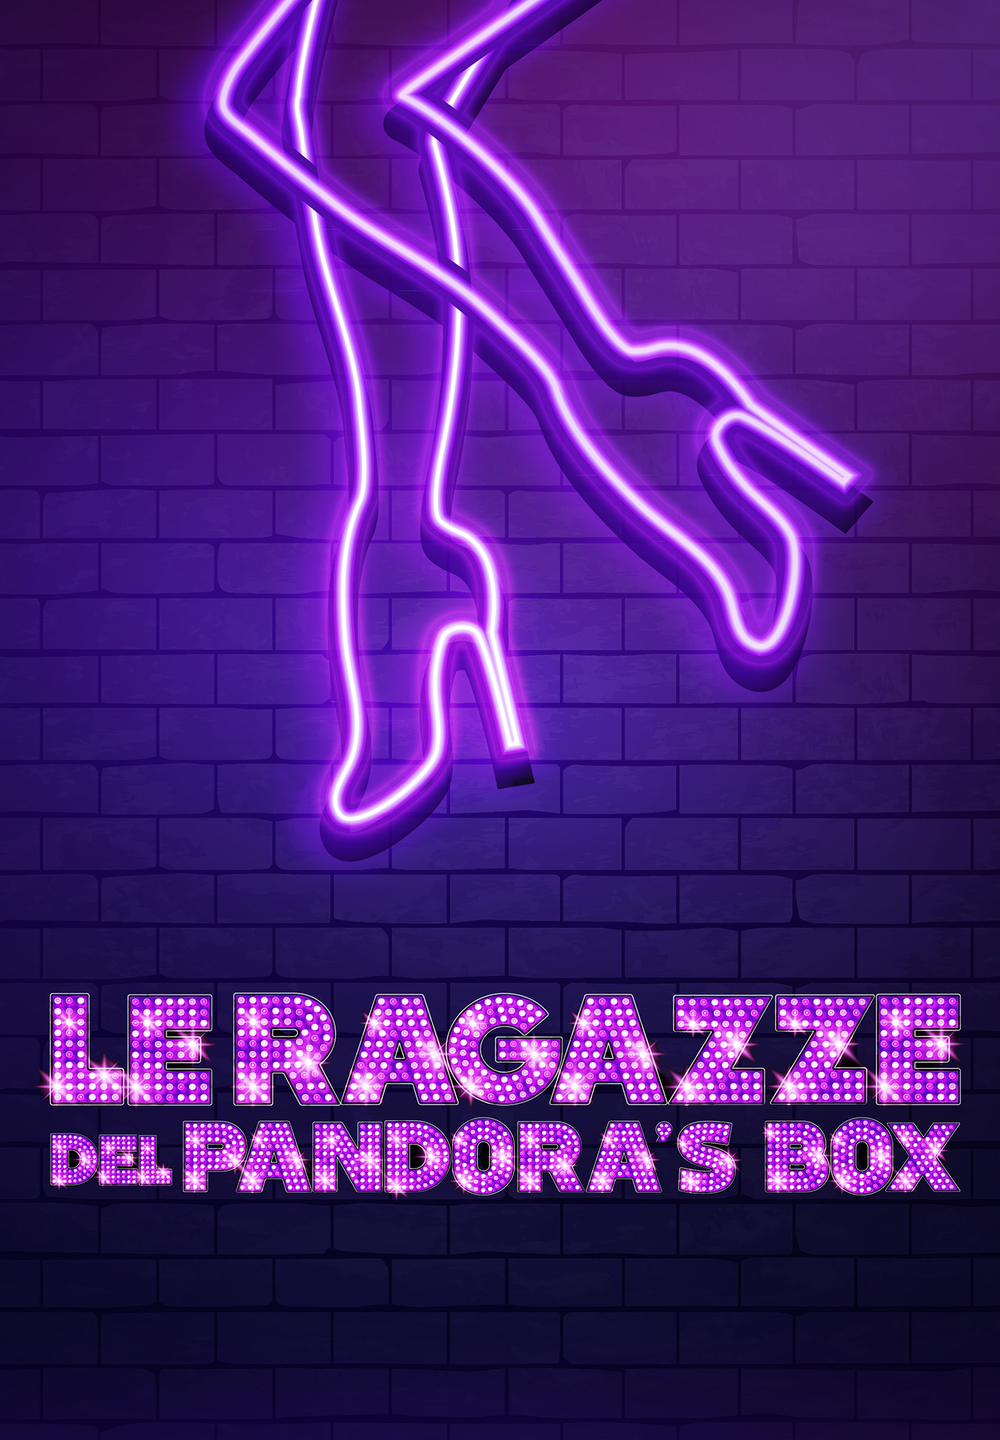 Le ragazze del Pandora’s Box [HD] (2020)